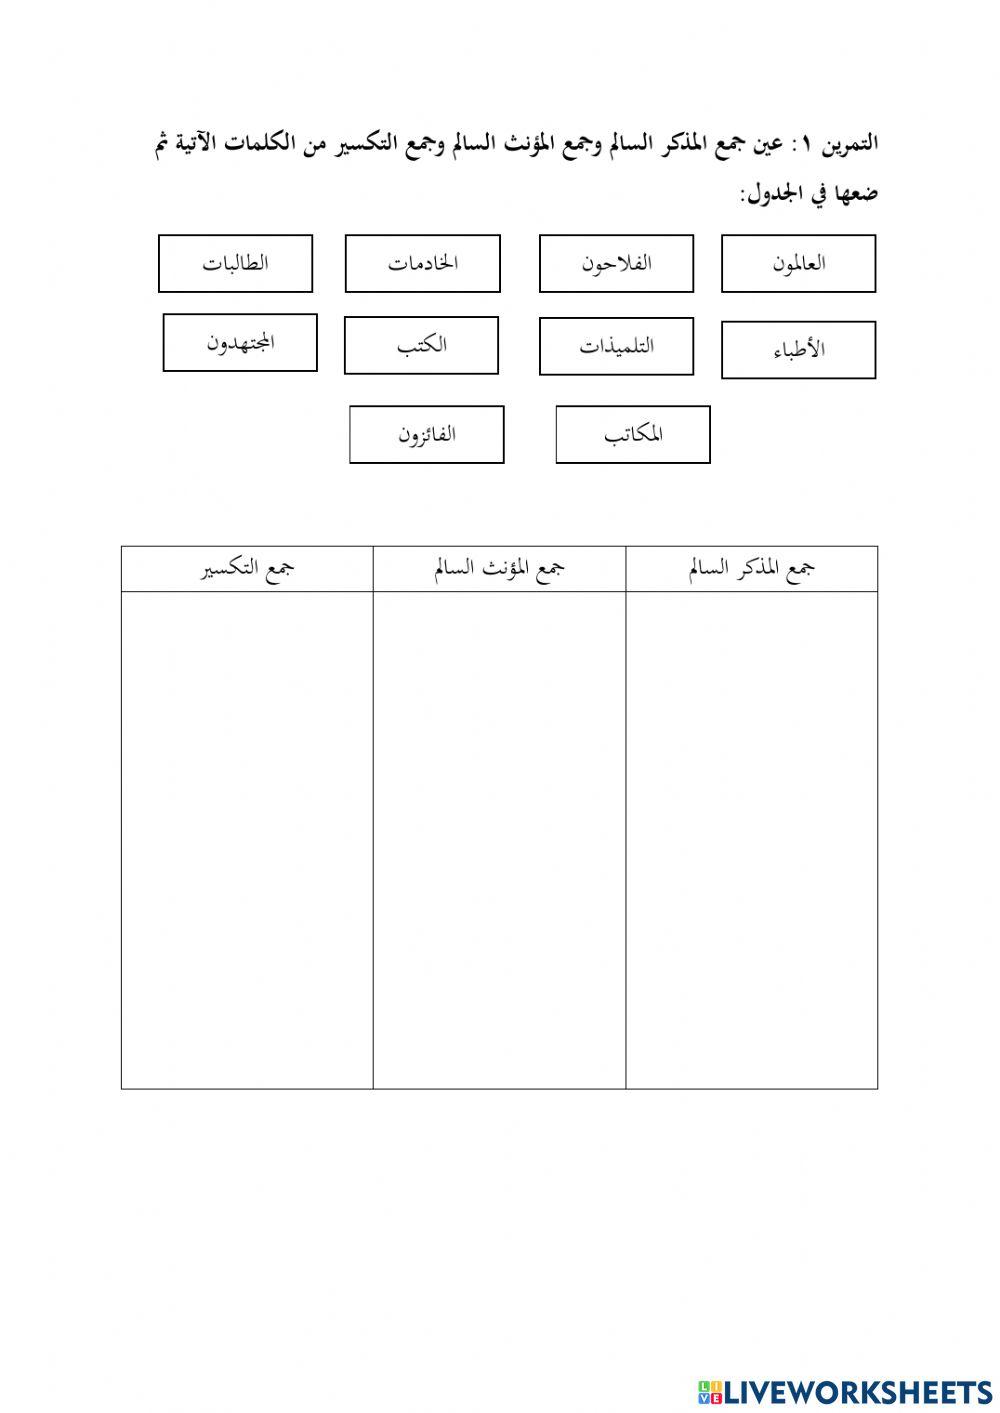 Latihan 1: Bahasa Arab